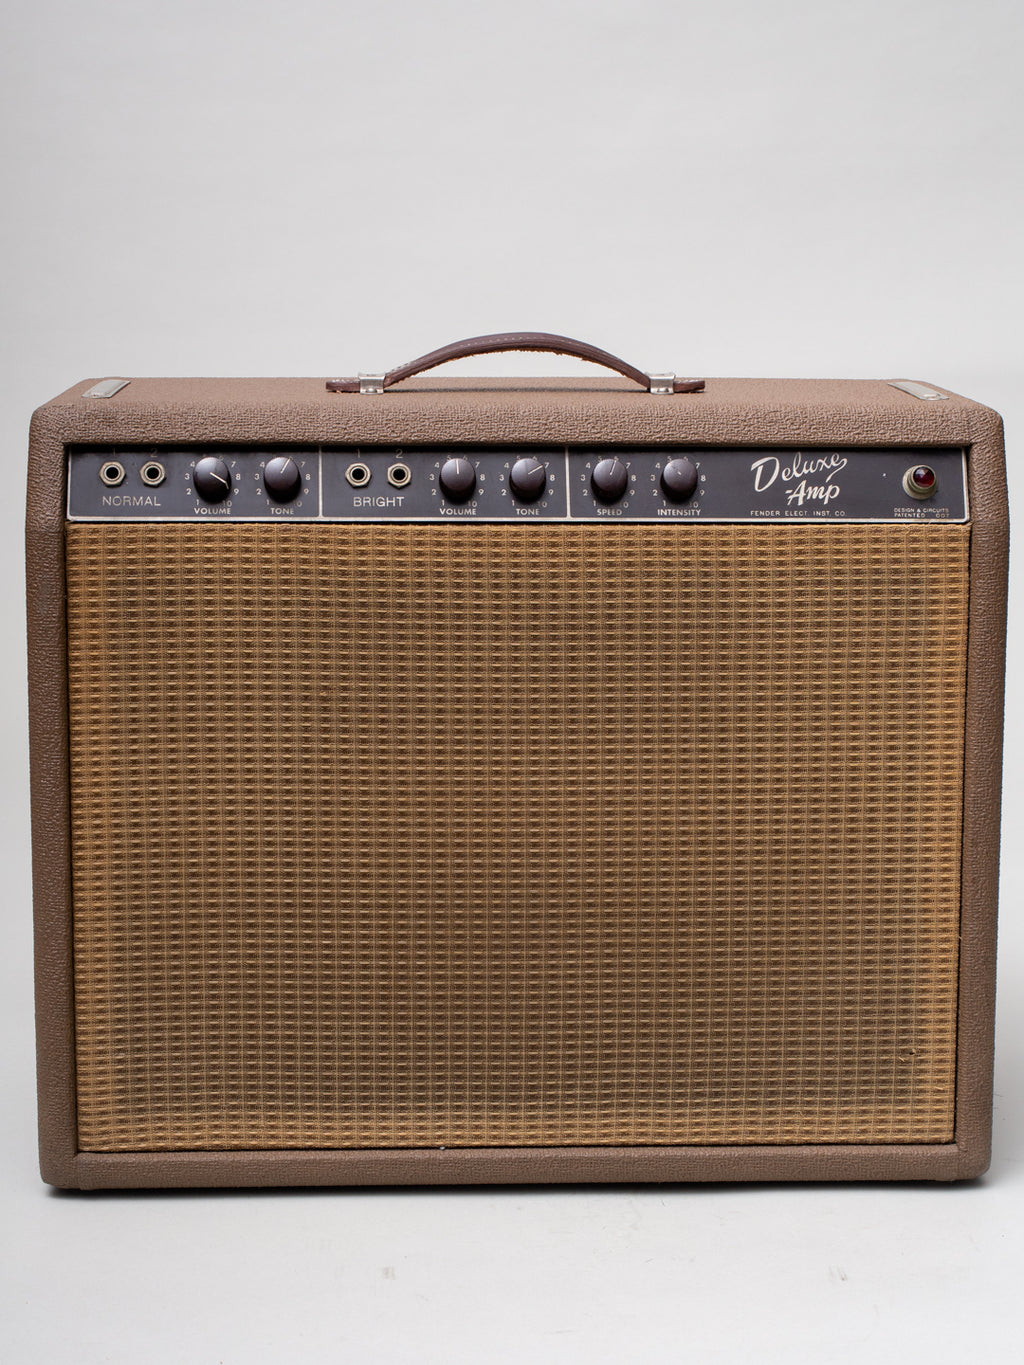 1961 Fender Deluxe Amp Model 6G3 Brownface